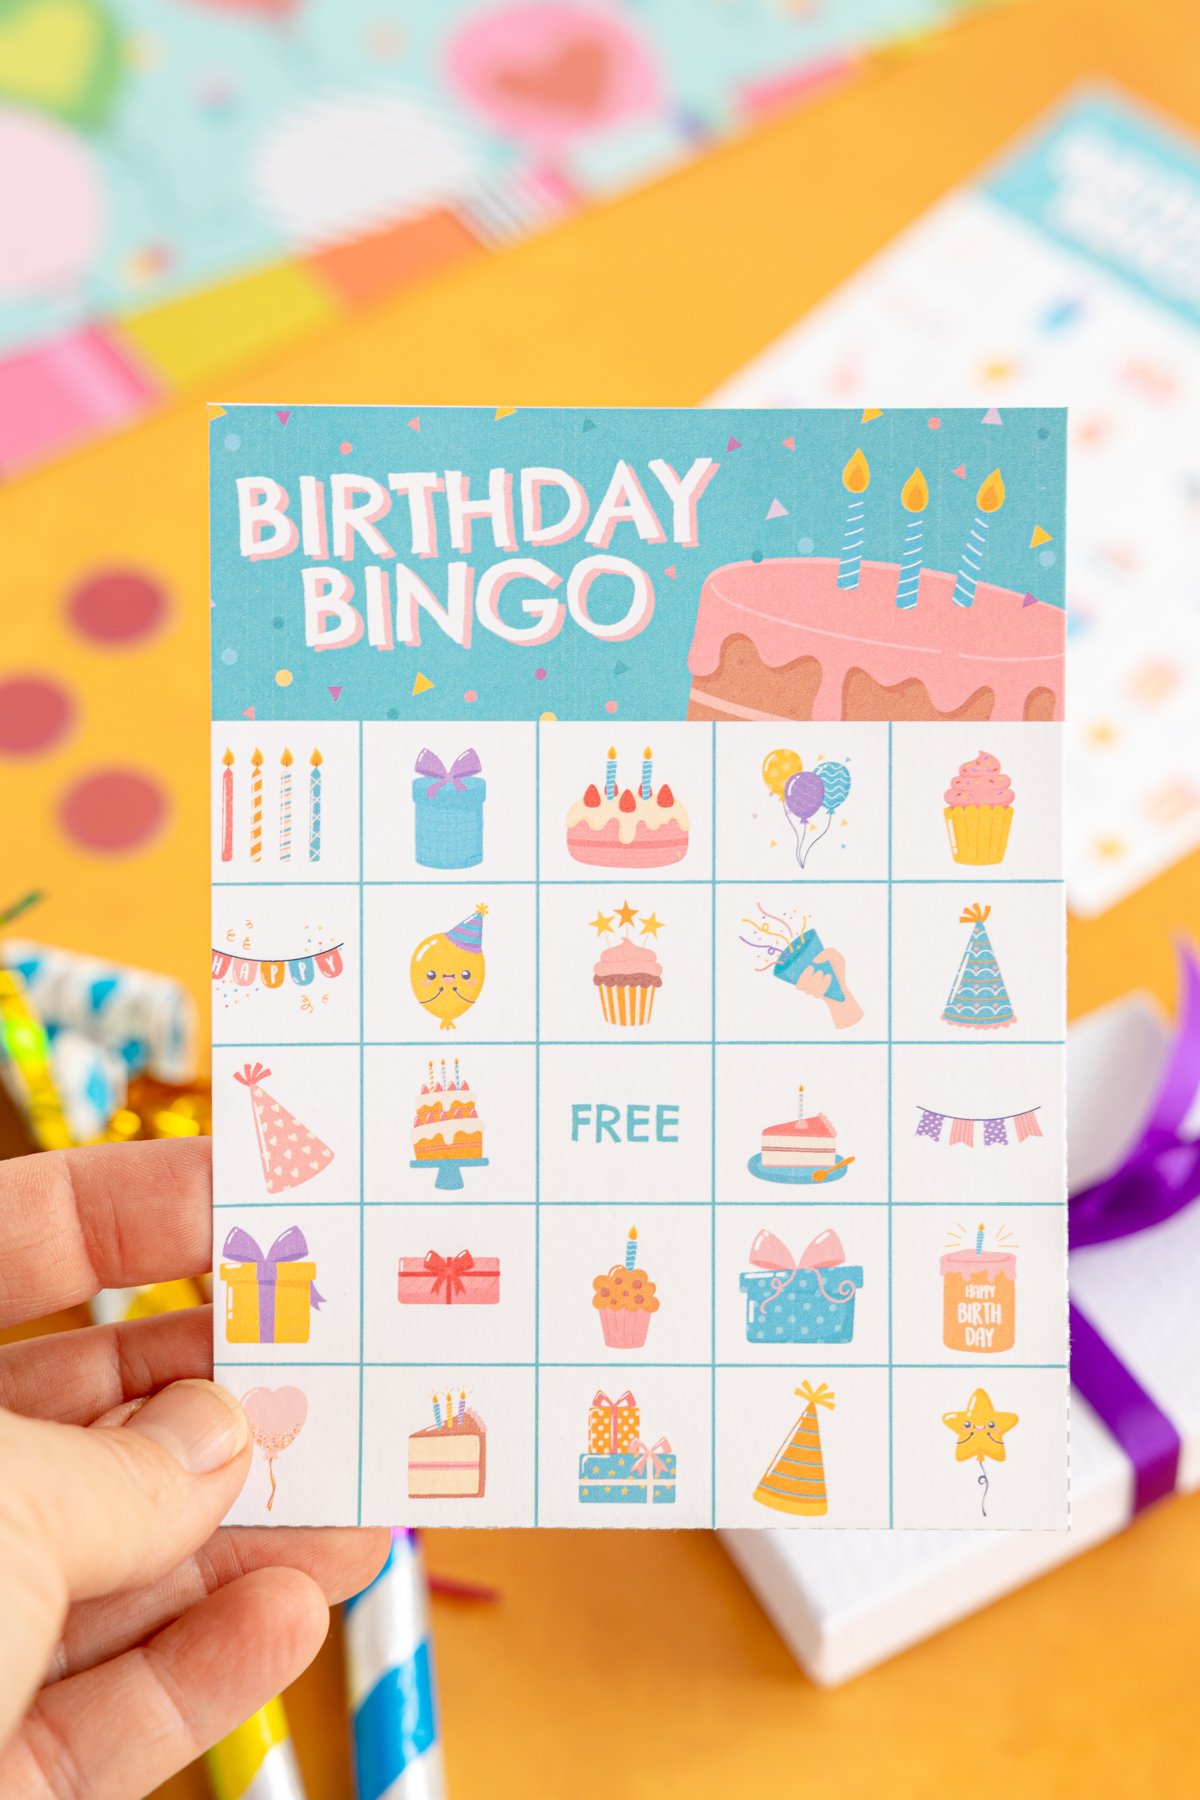 hand holding a birthday bingo card